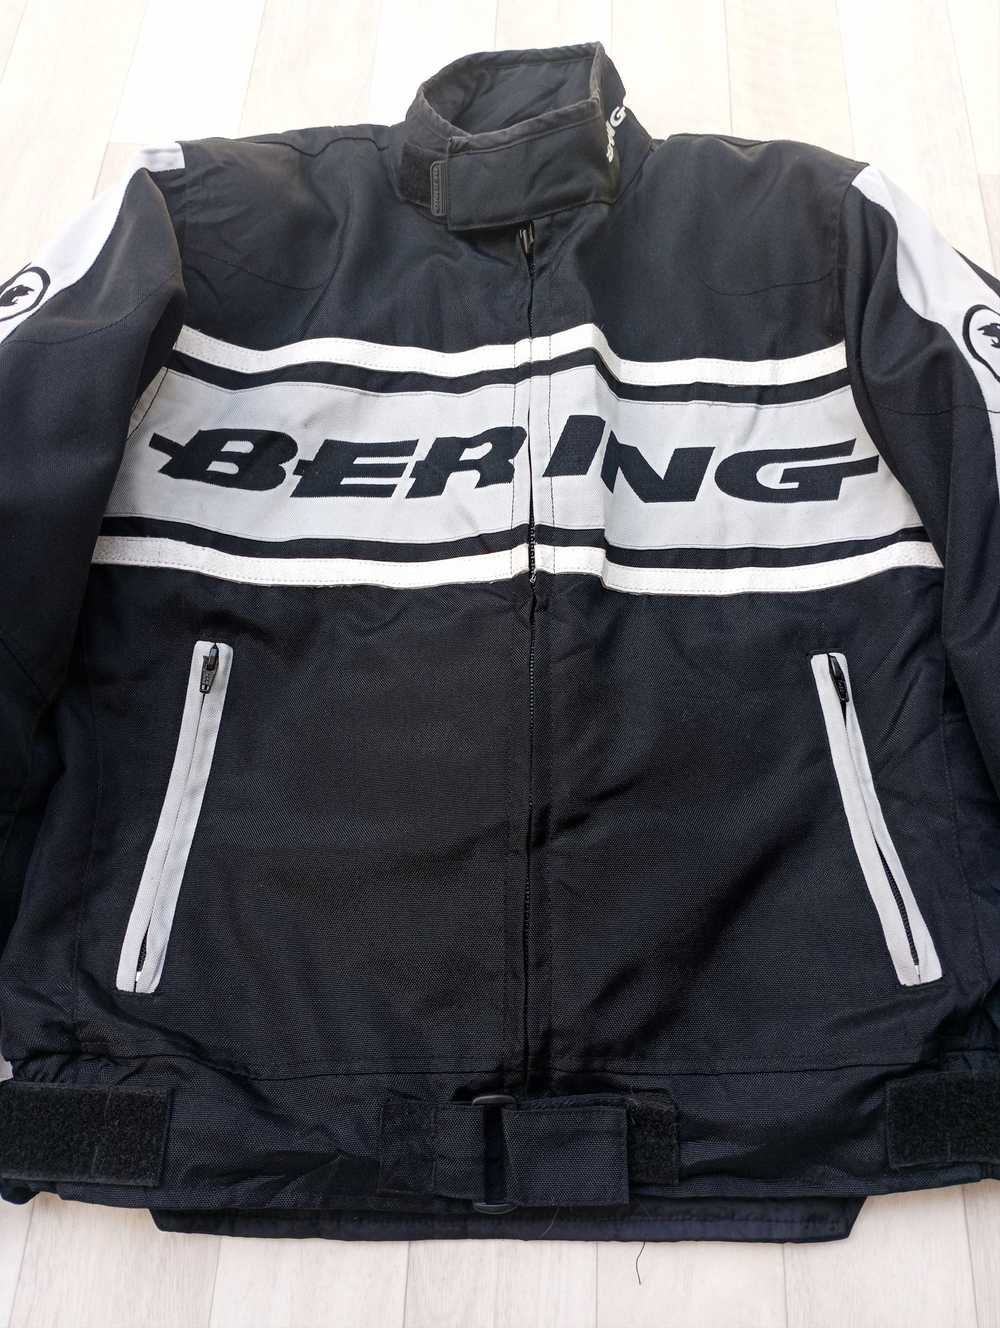 MOTO × Racing Bering motorcycle jacket size S - image 4